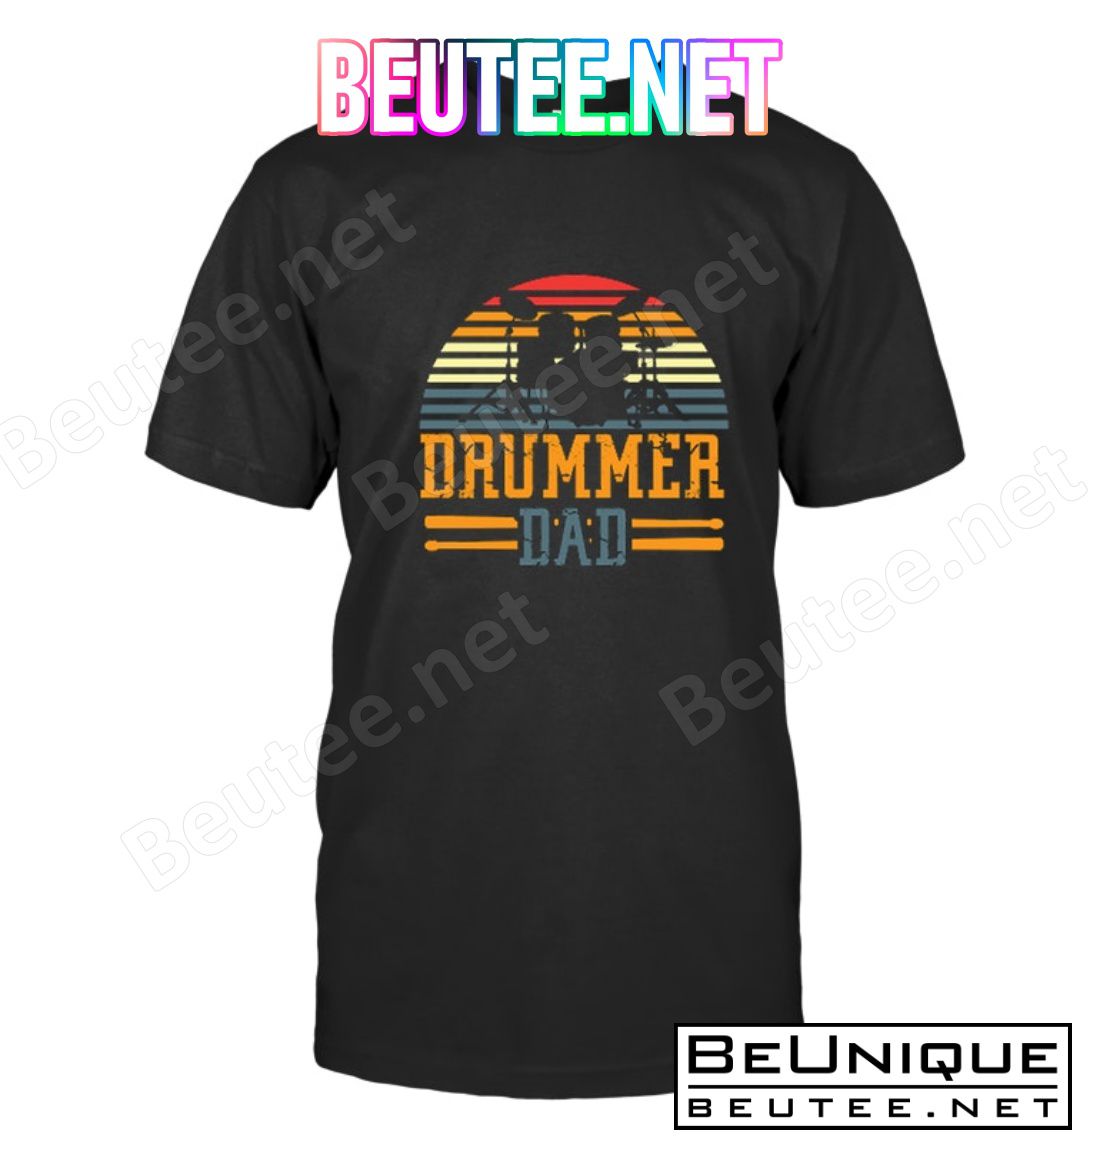 Drummers Dad Retro Shirt